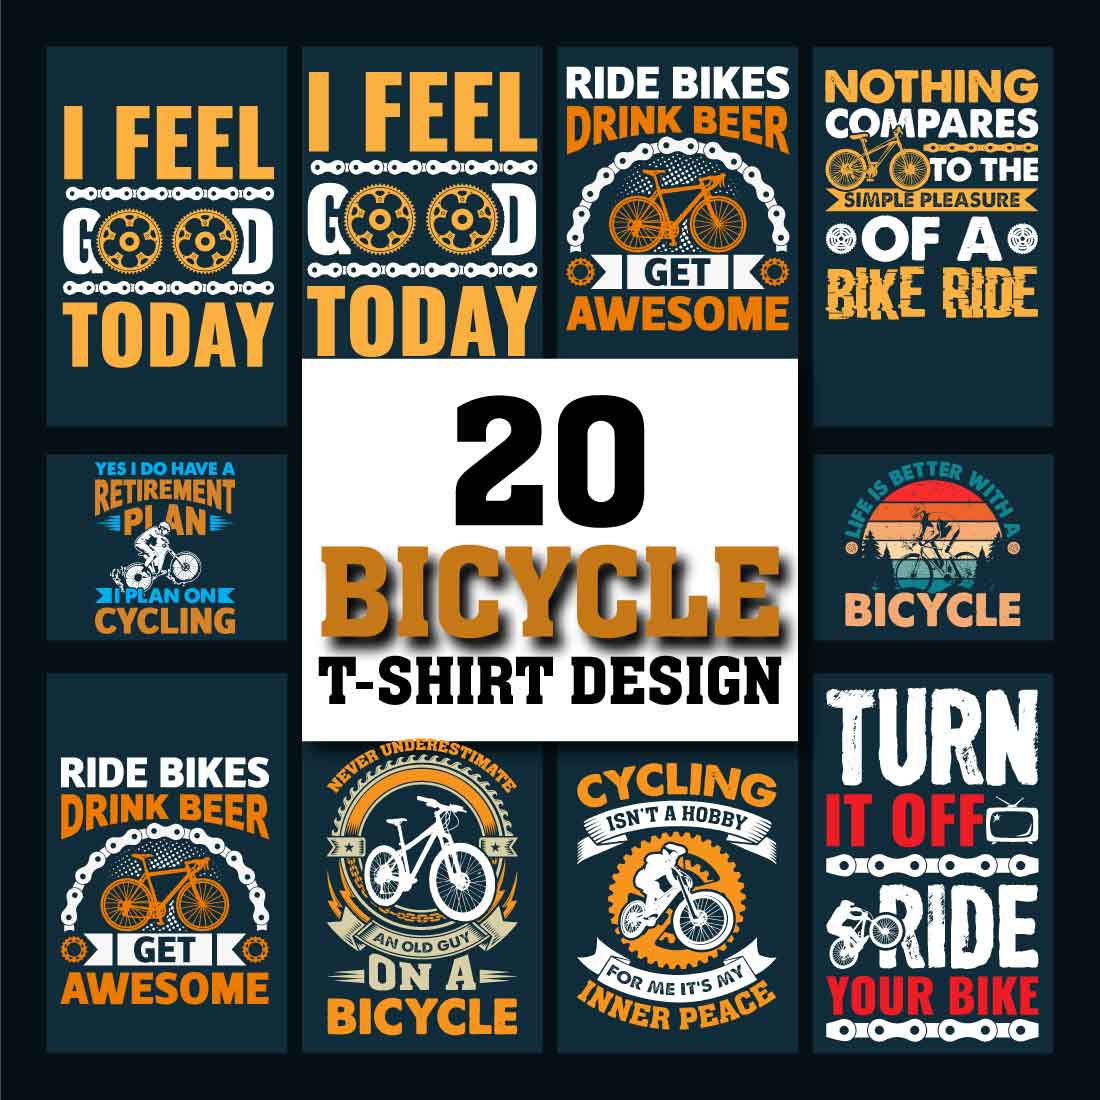 20 Bicycle T-Shirt Design Bundle cover image.